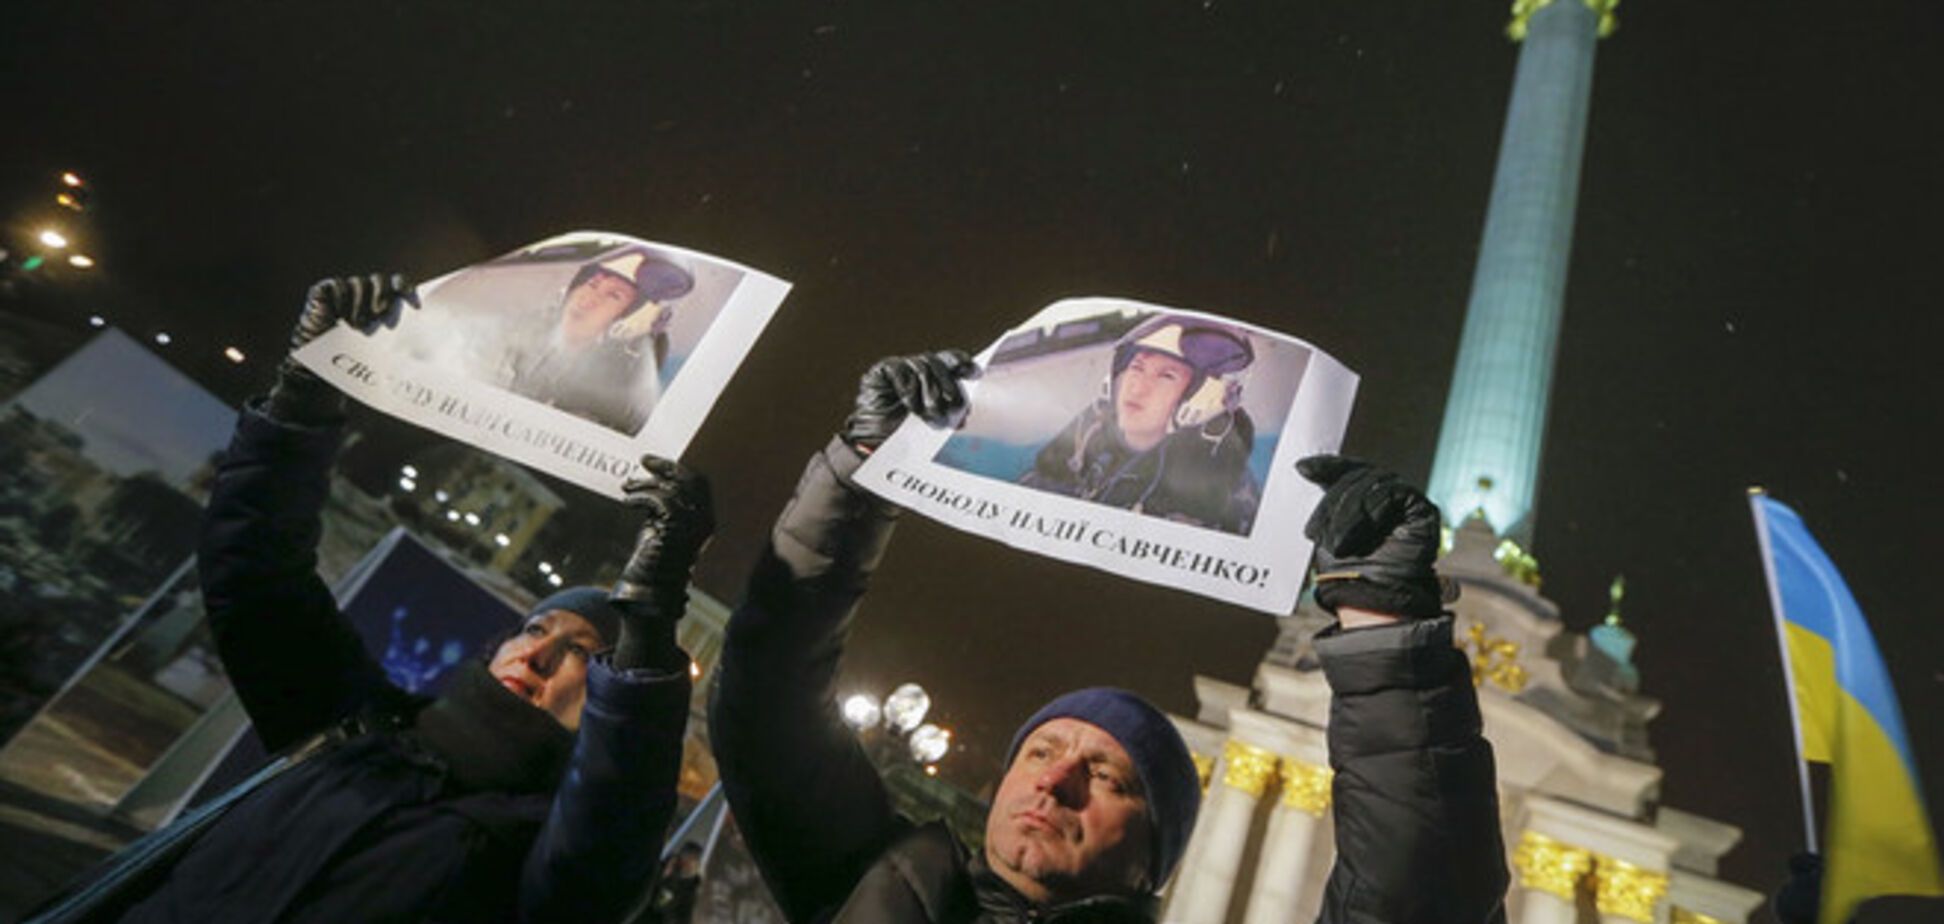 Життя Савченко висить на волоску - російський правозахисник